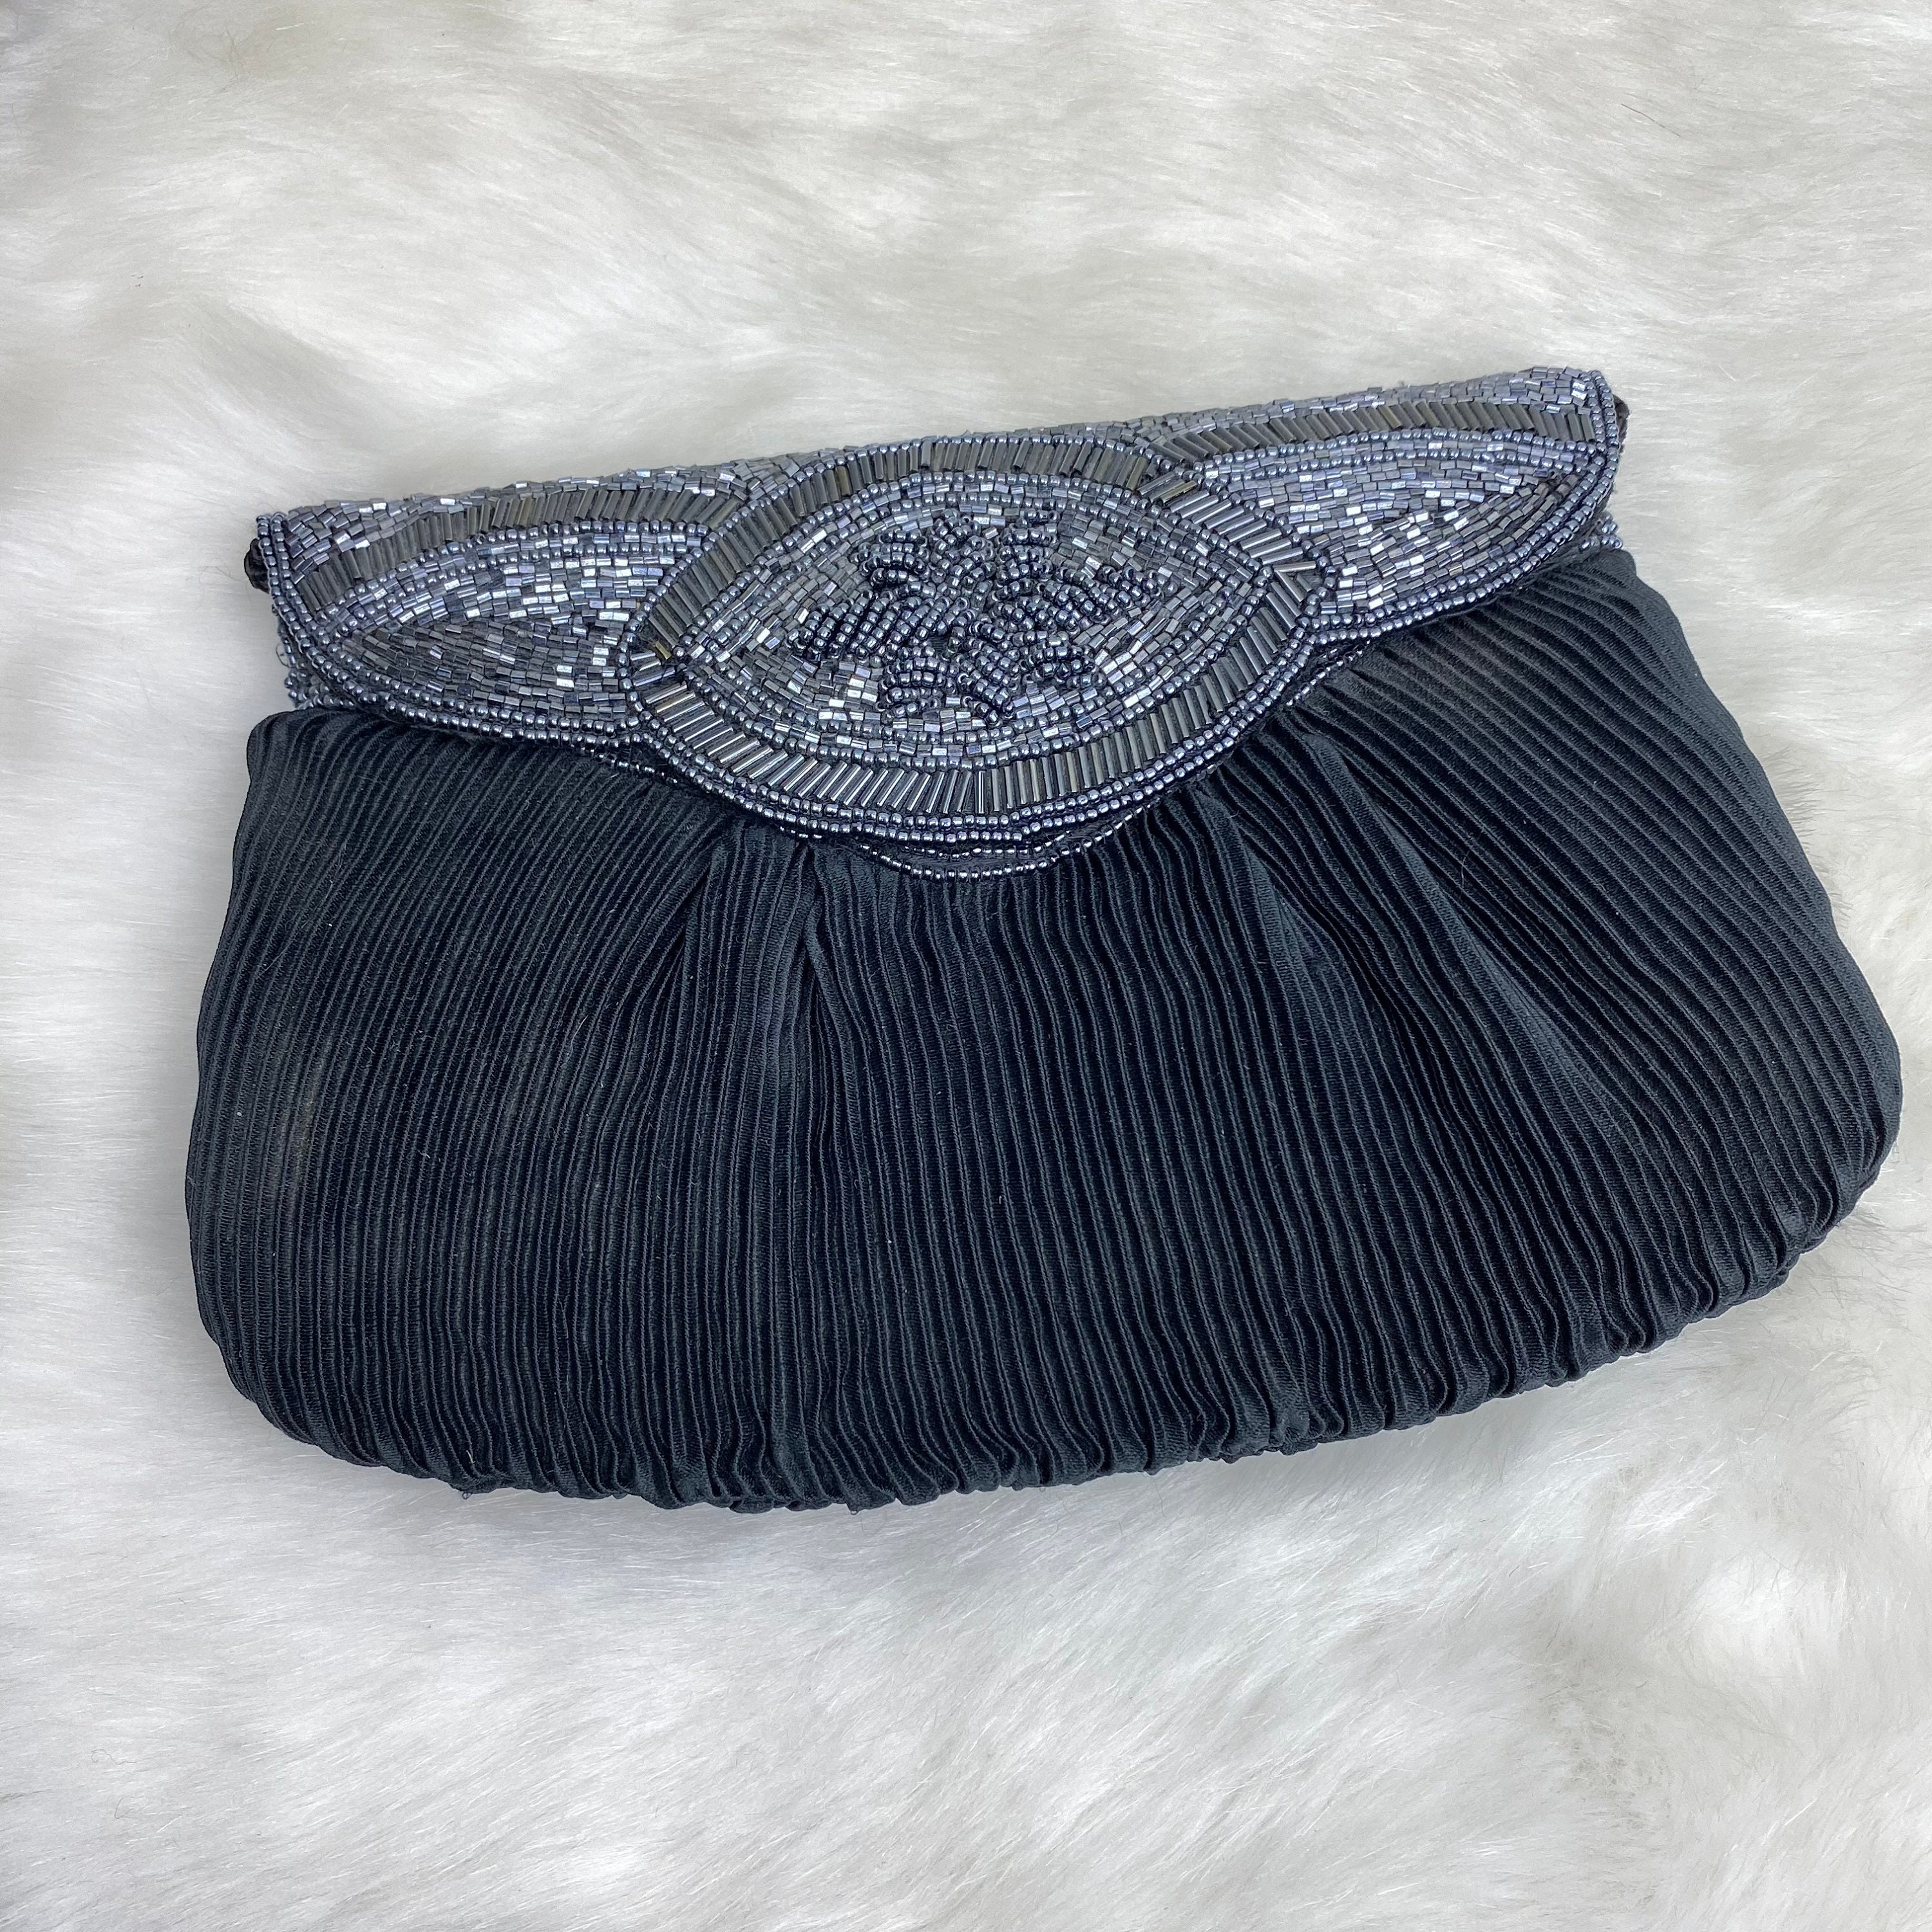 Black Beaded Clutch with Braided Cloth Strap, 7.5 x 5, Vintage Purse, Small Interior Mirror, Carolyne Barton Label. Evening Bag, Handbag